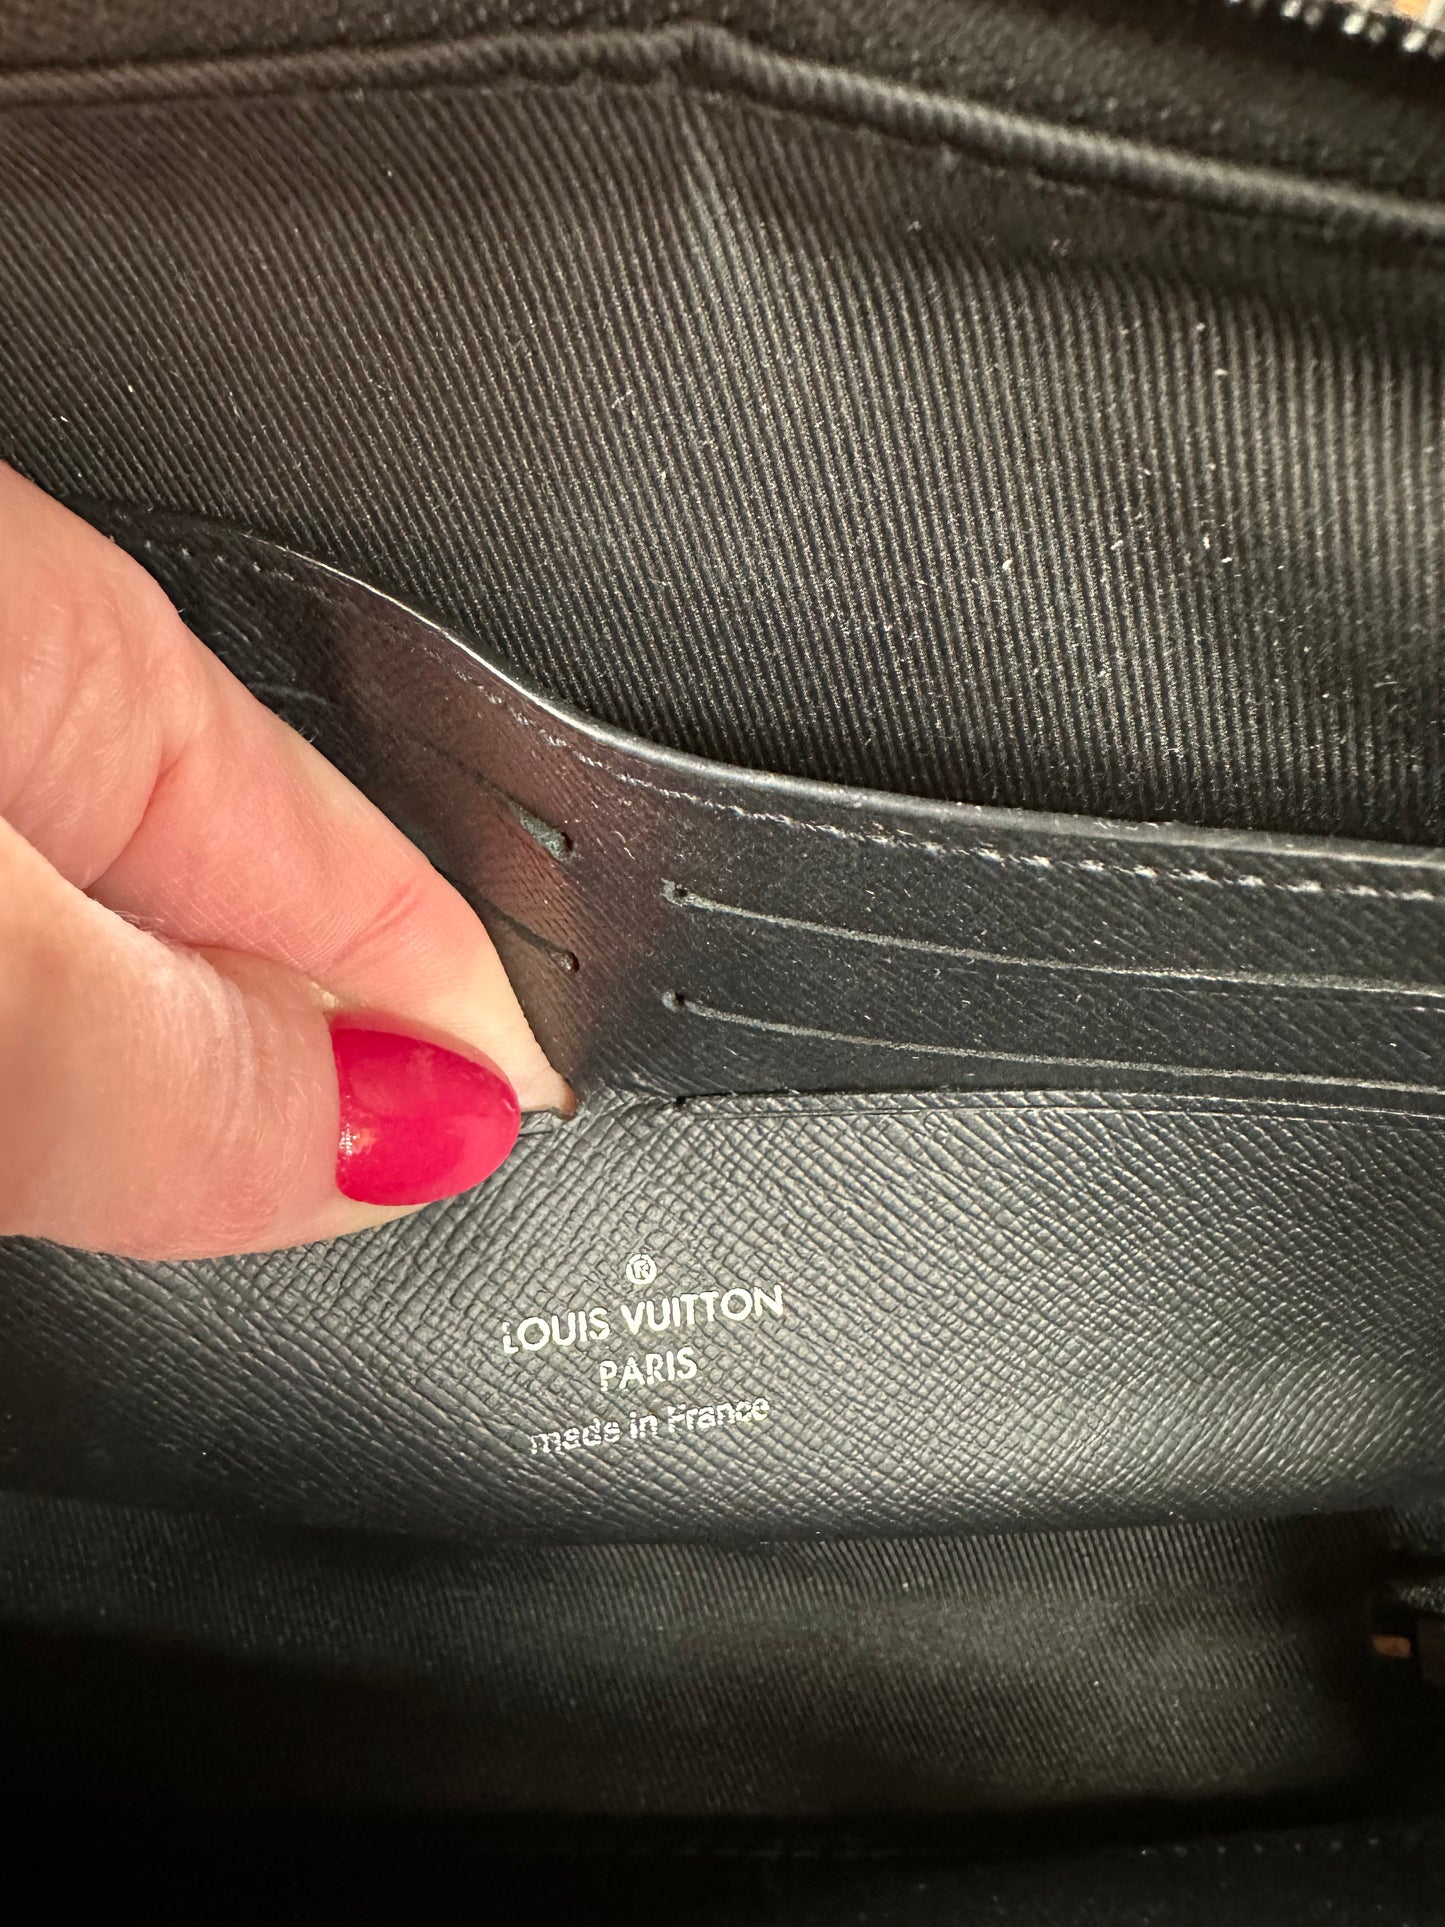 Louis Vuitton logo inside